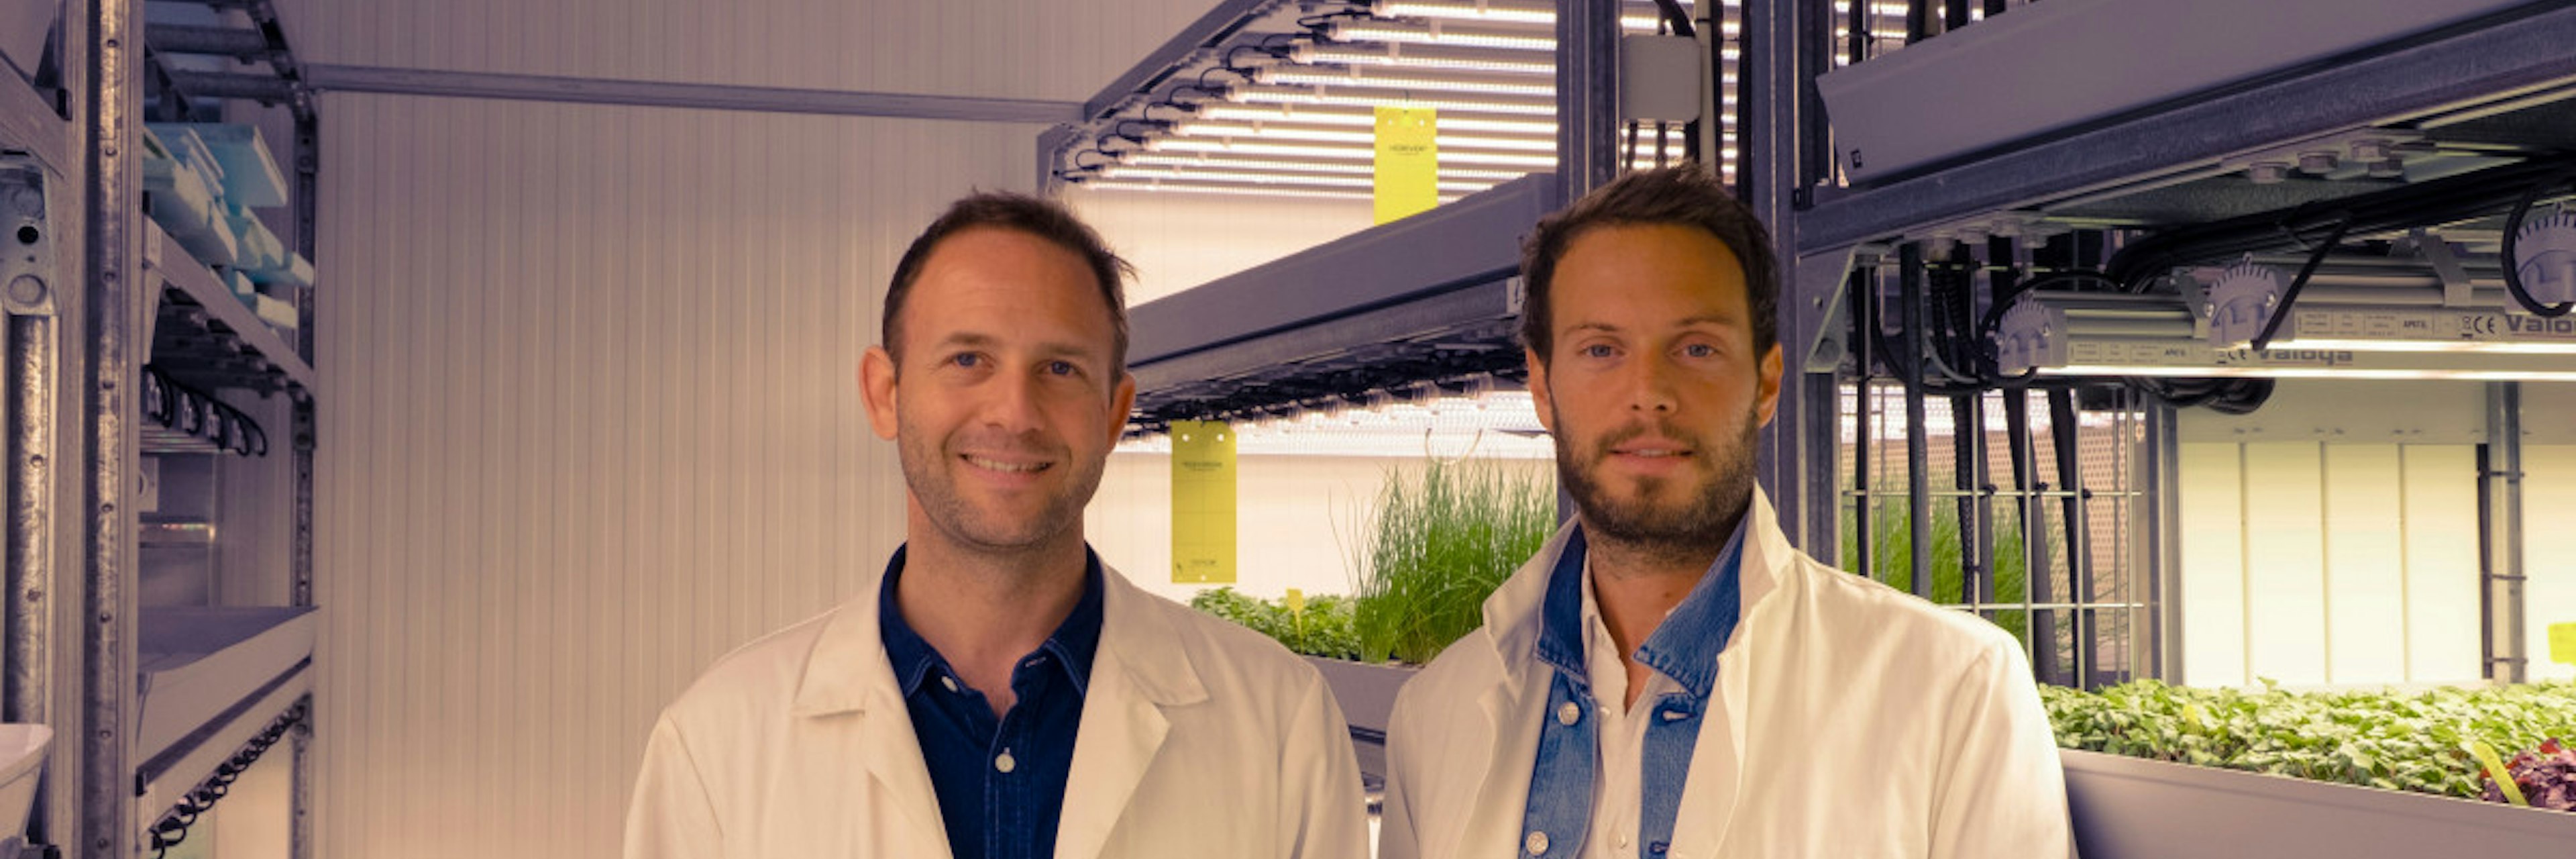 Jungle founders Nicolas Seguy and Gilles Dreyfus